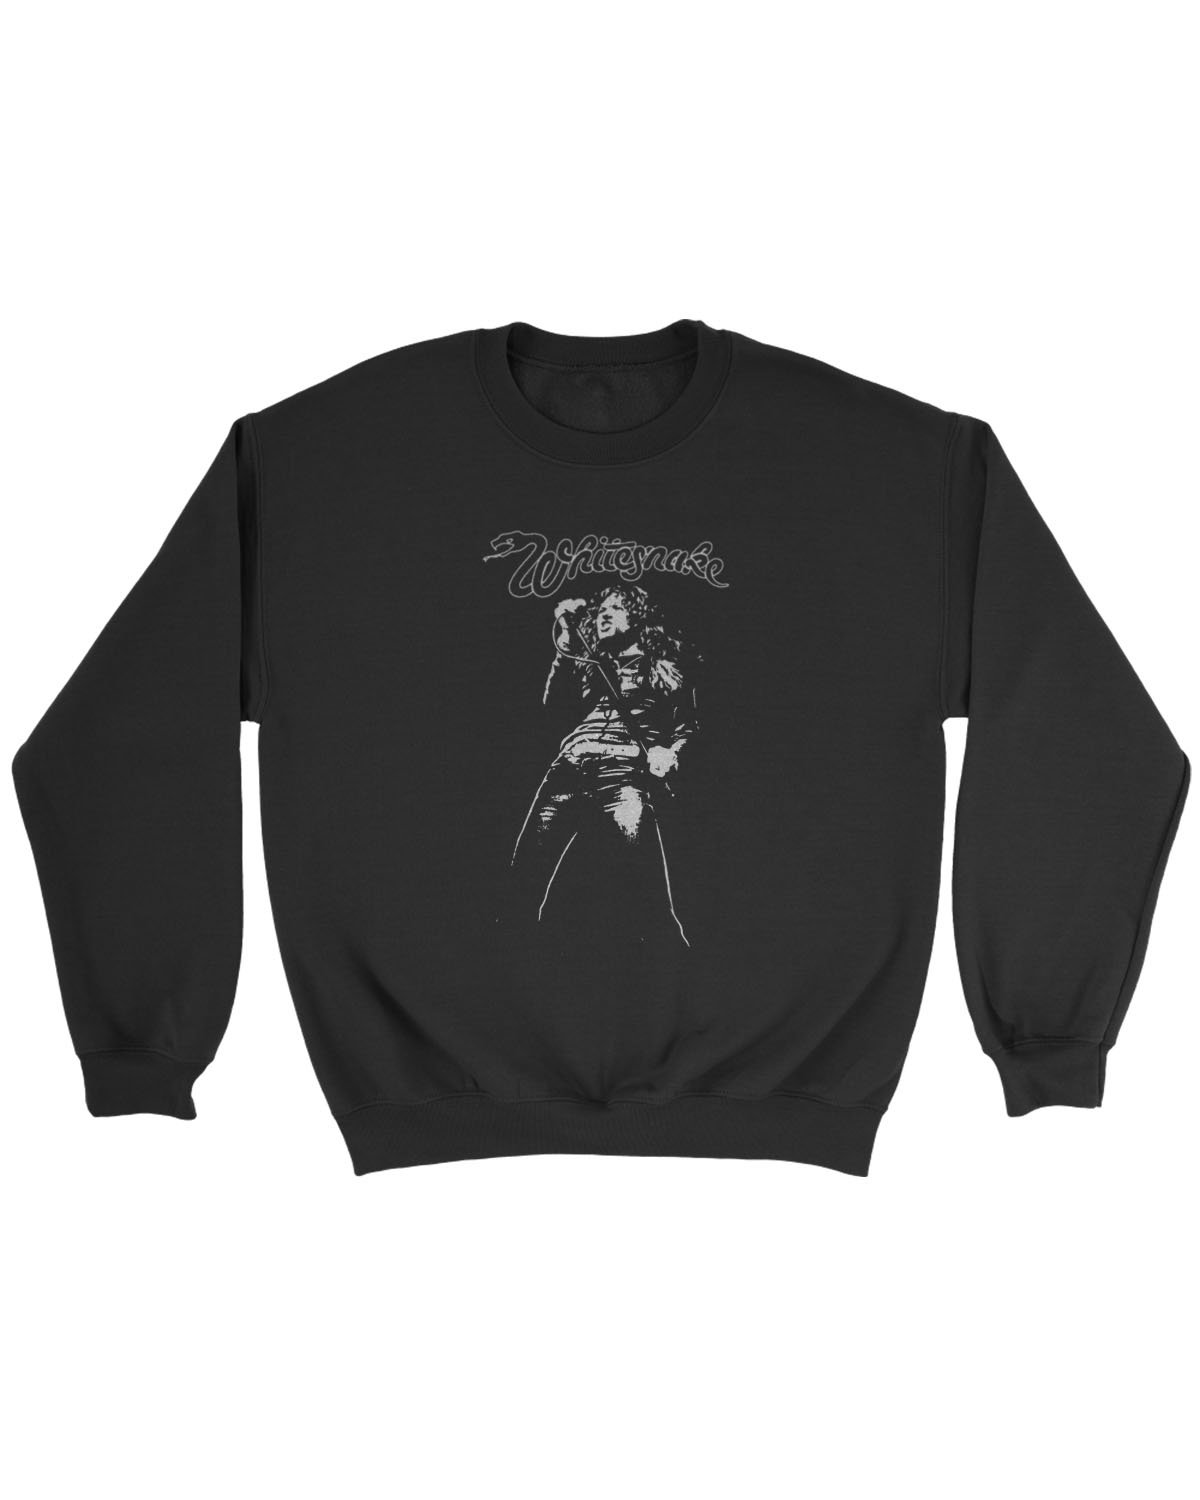 Whitesnake David Coverdale Hard Rock Sweatshirt